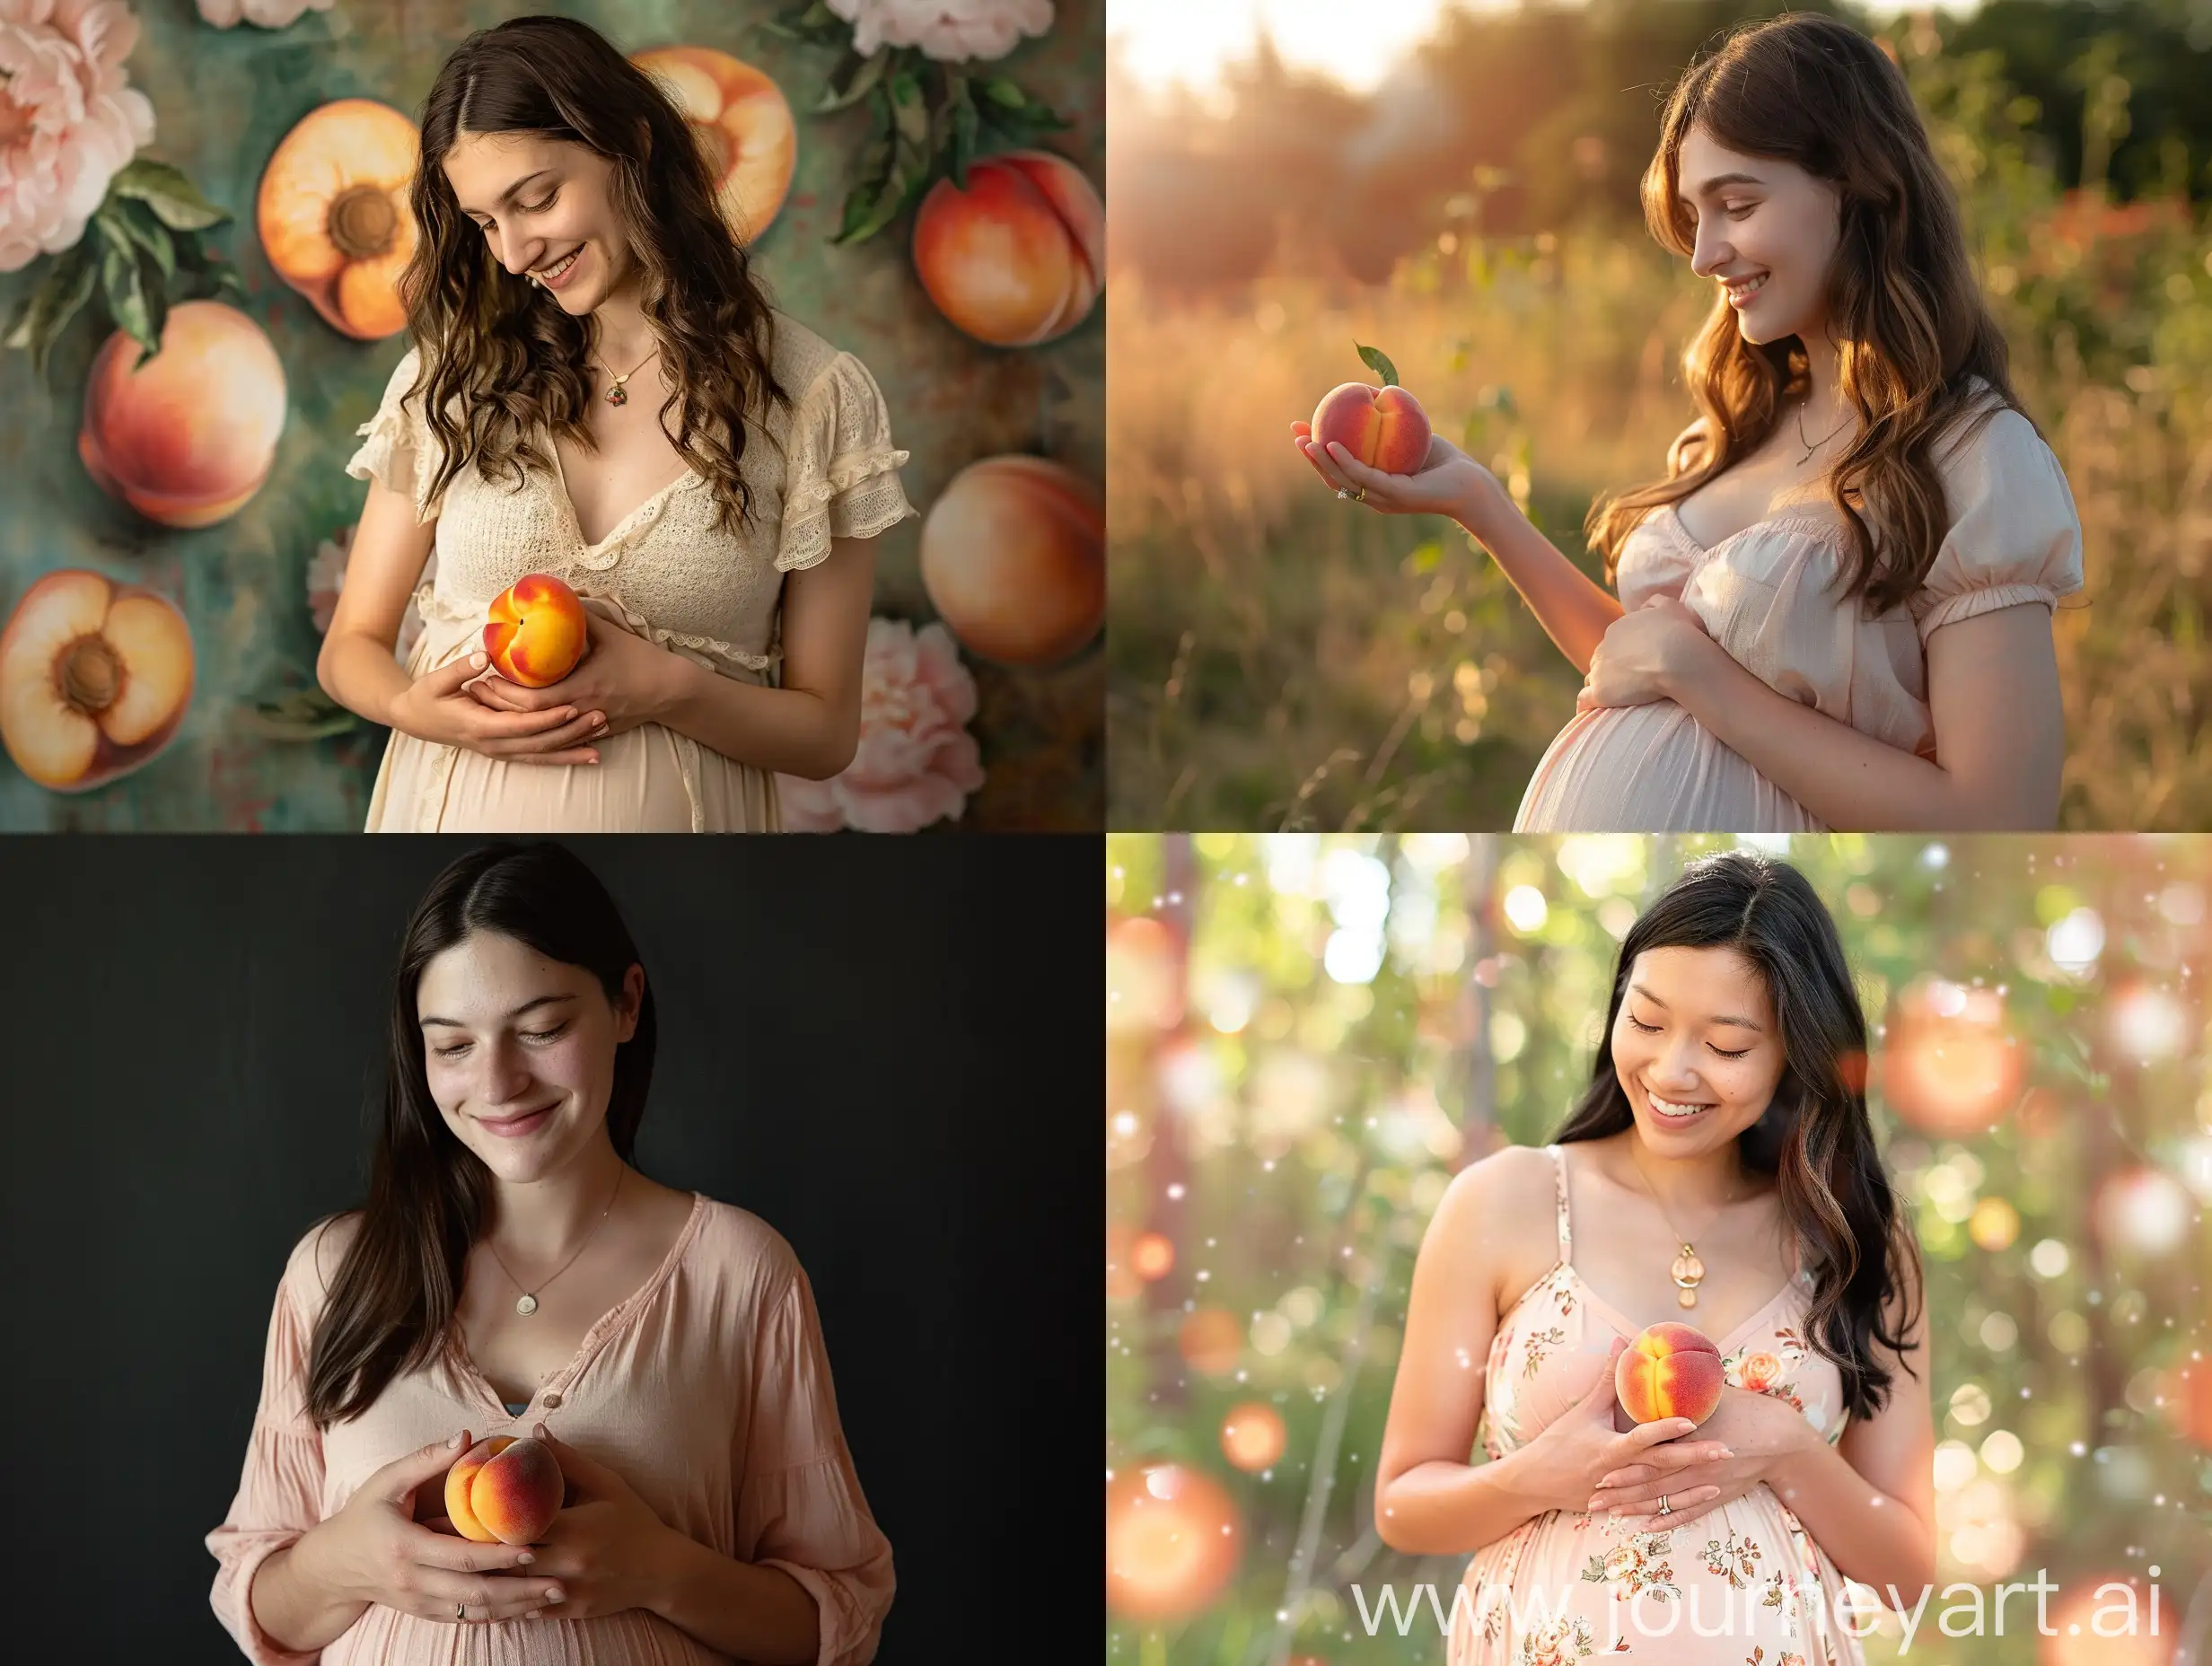 A photo of a pregnant woman holding a peach